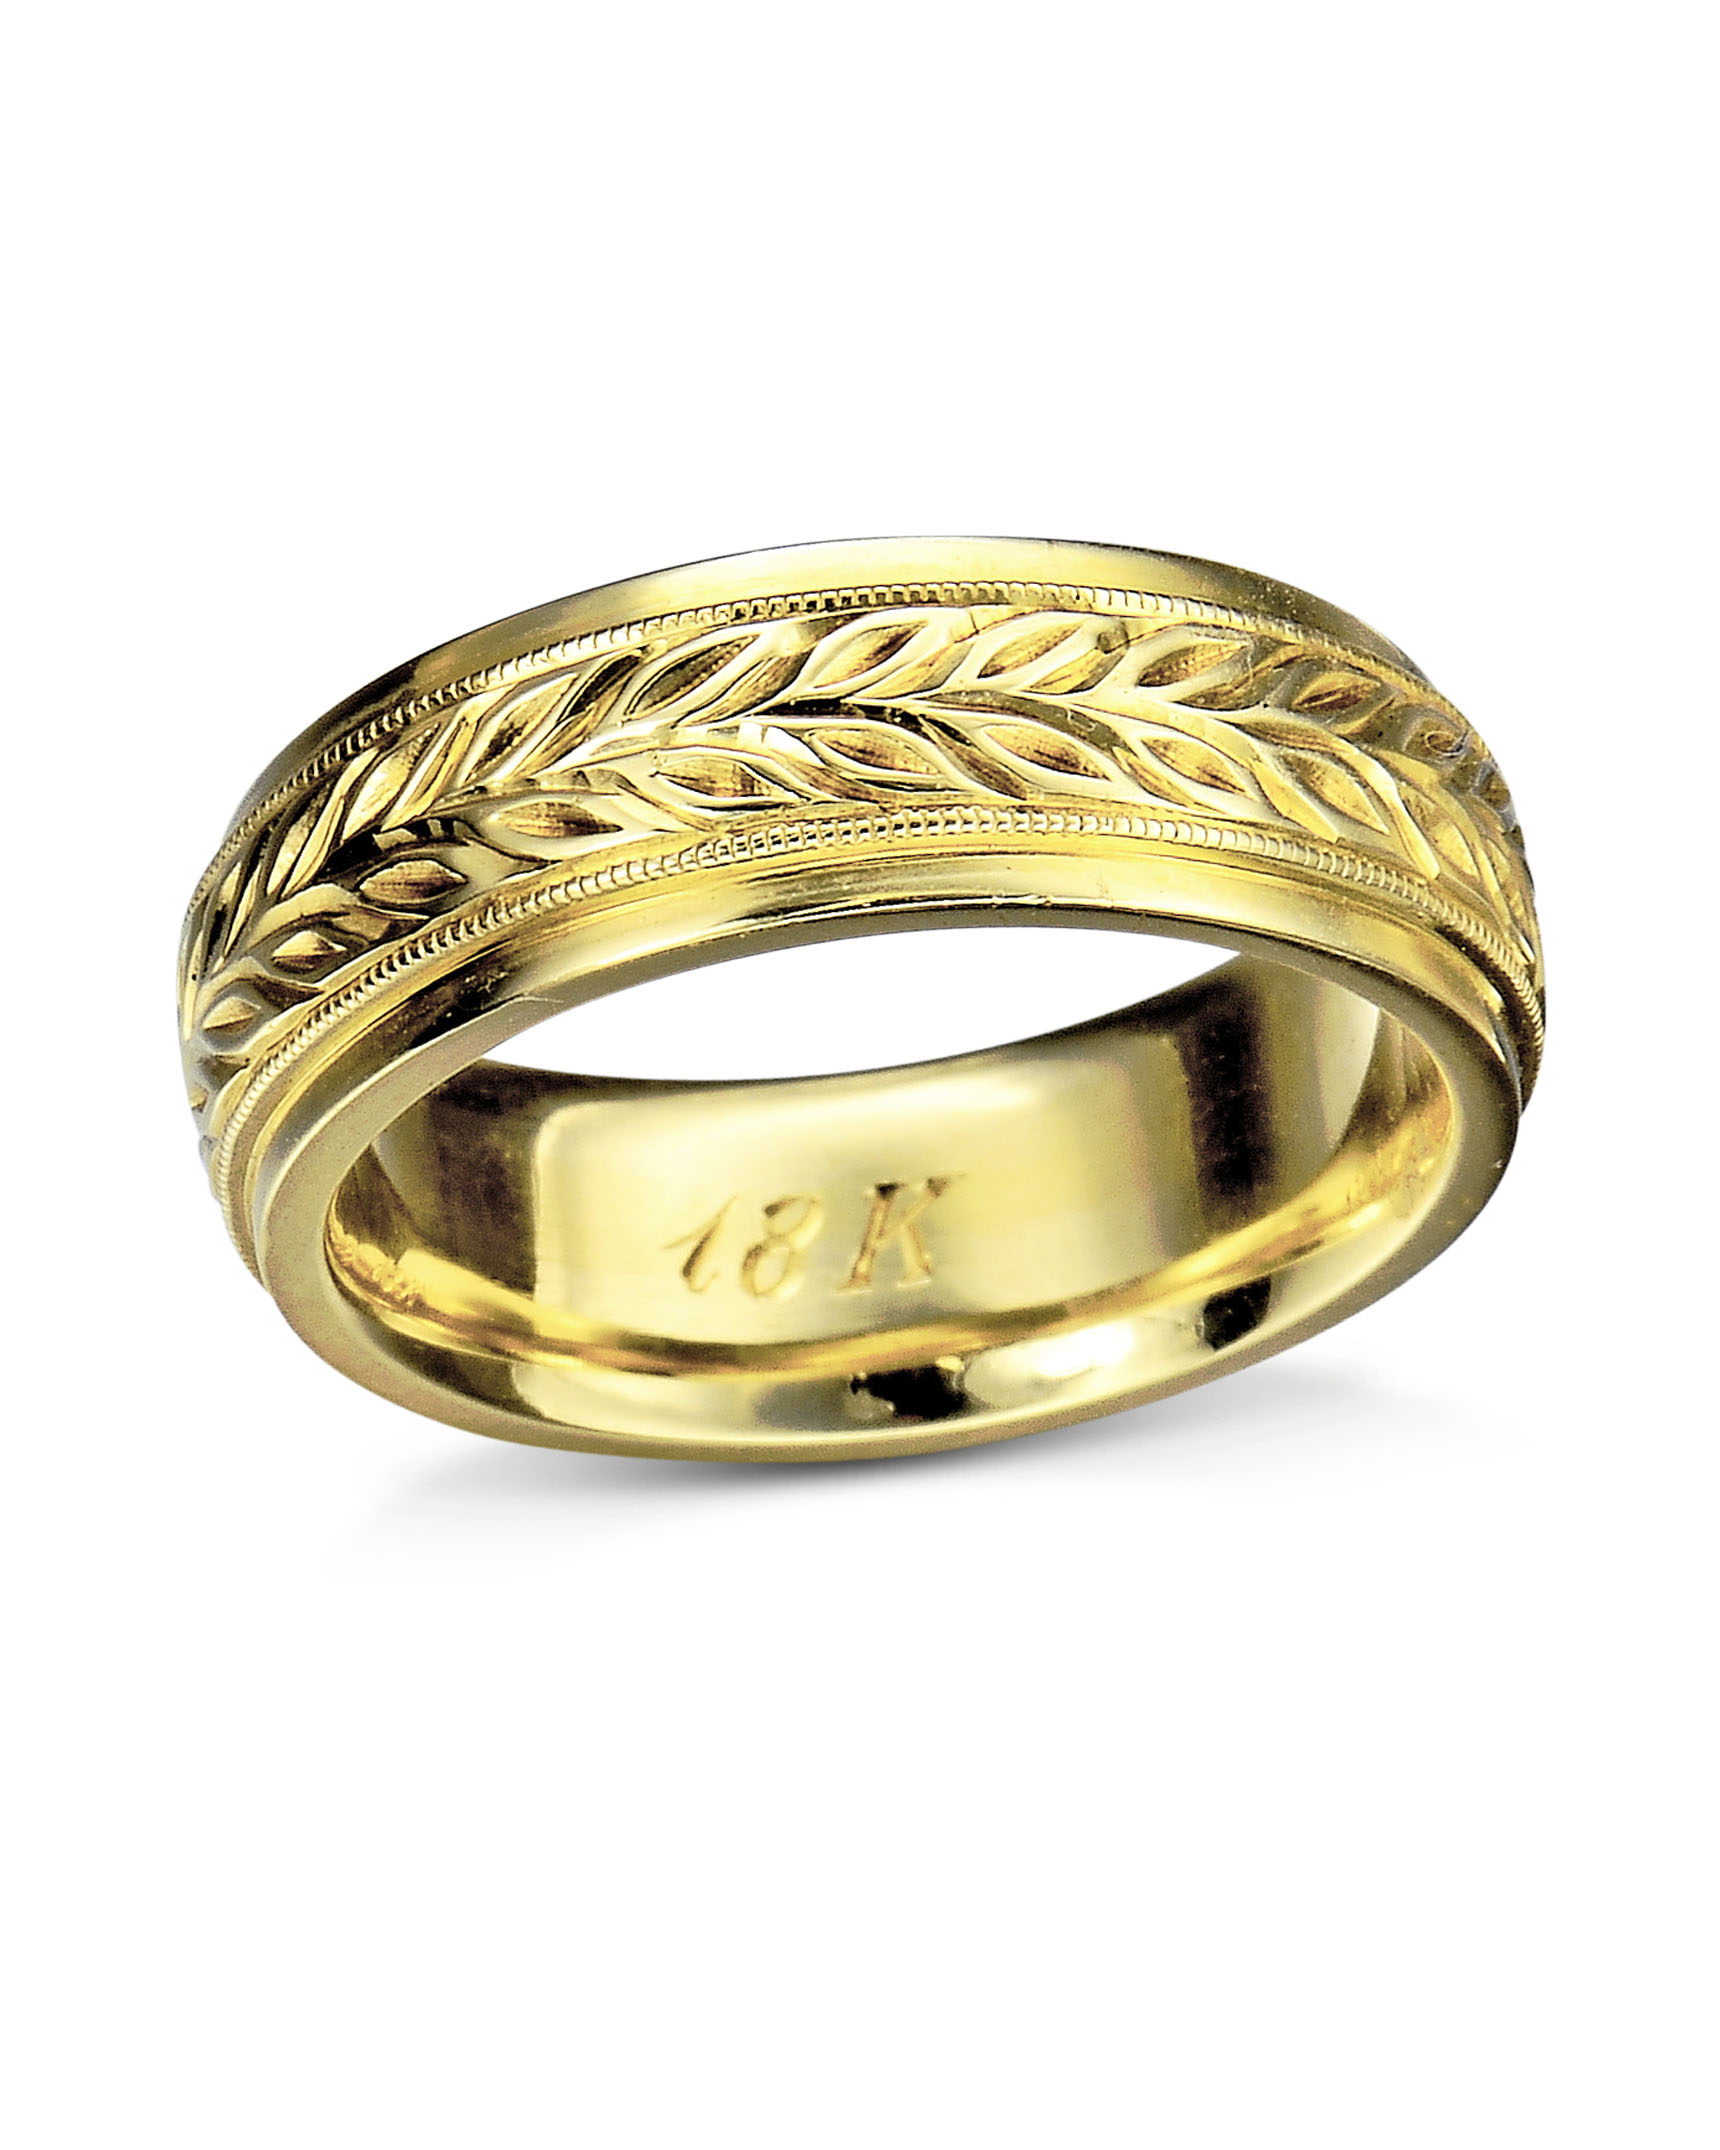 Matrashakti Ring Band cross CARVING Gold Plated Band Ring Size-16,  inches-2.21, MM-56.3 Brass Gold Plated Ring Price in India - Buy  Matrashakti Ring Band cross CARVING Gold Plated Band Ring Size-16,  inches-2.21,